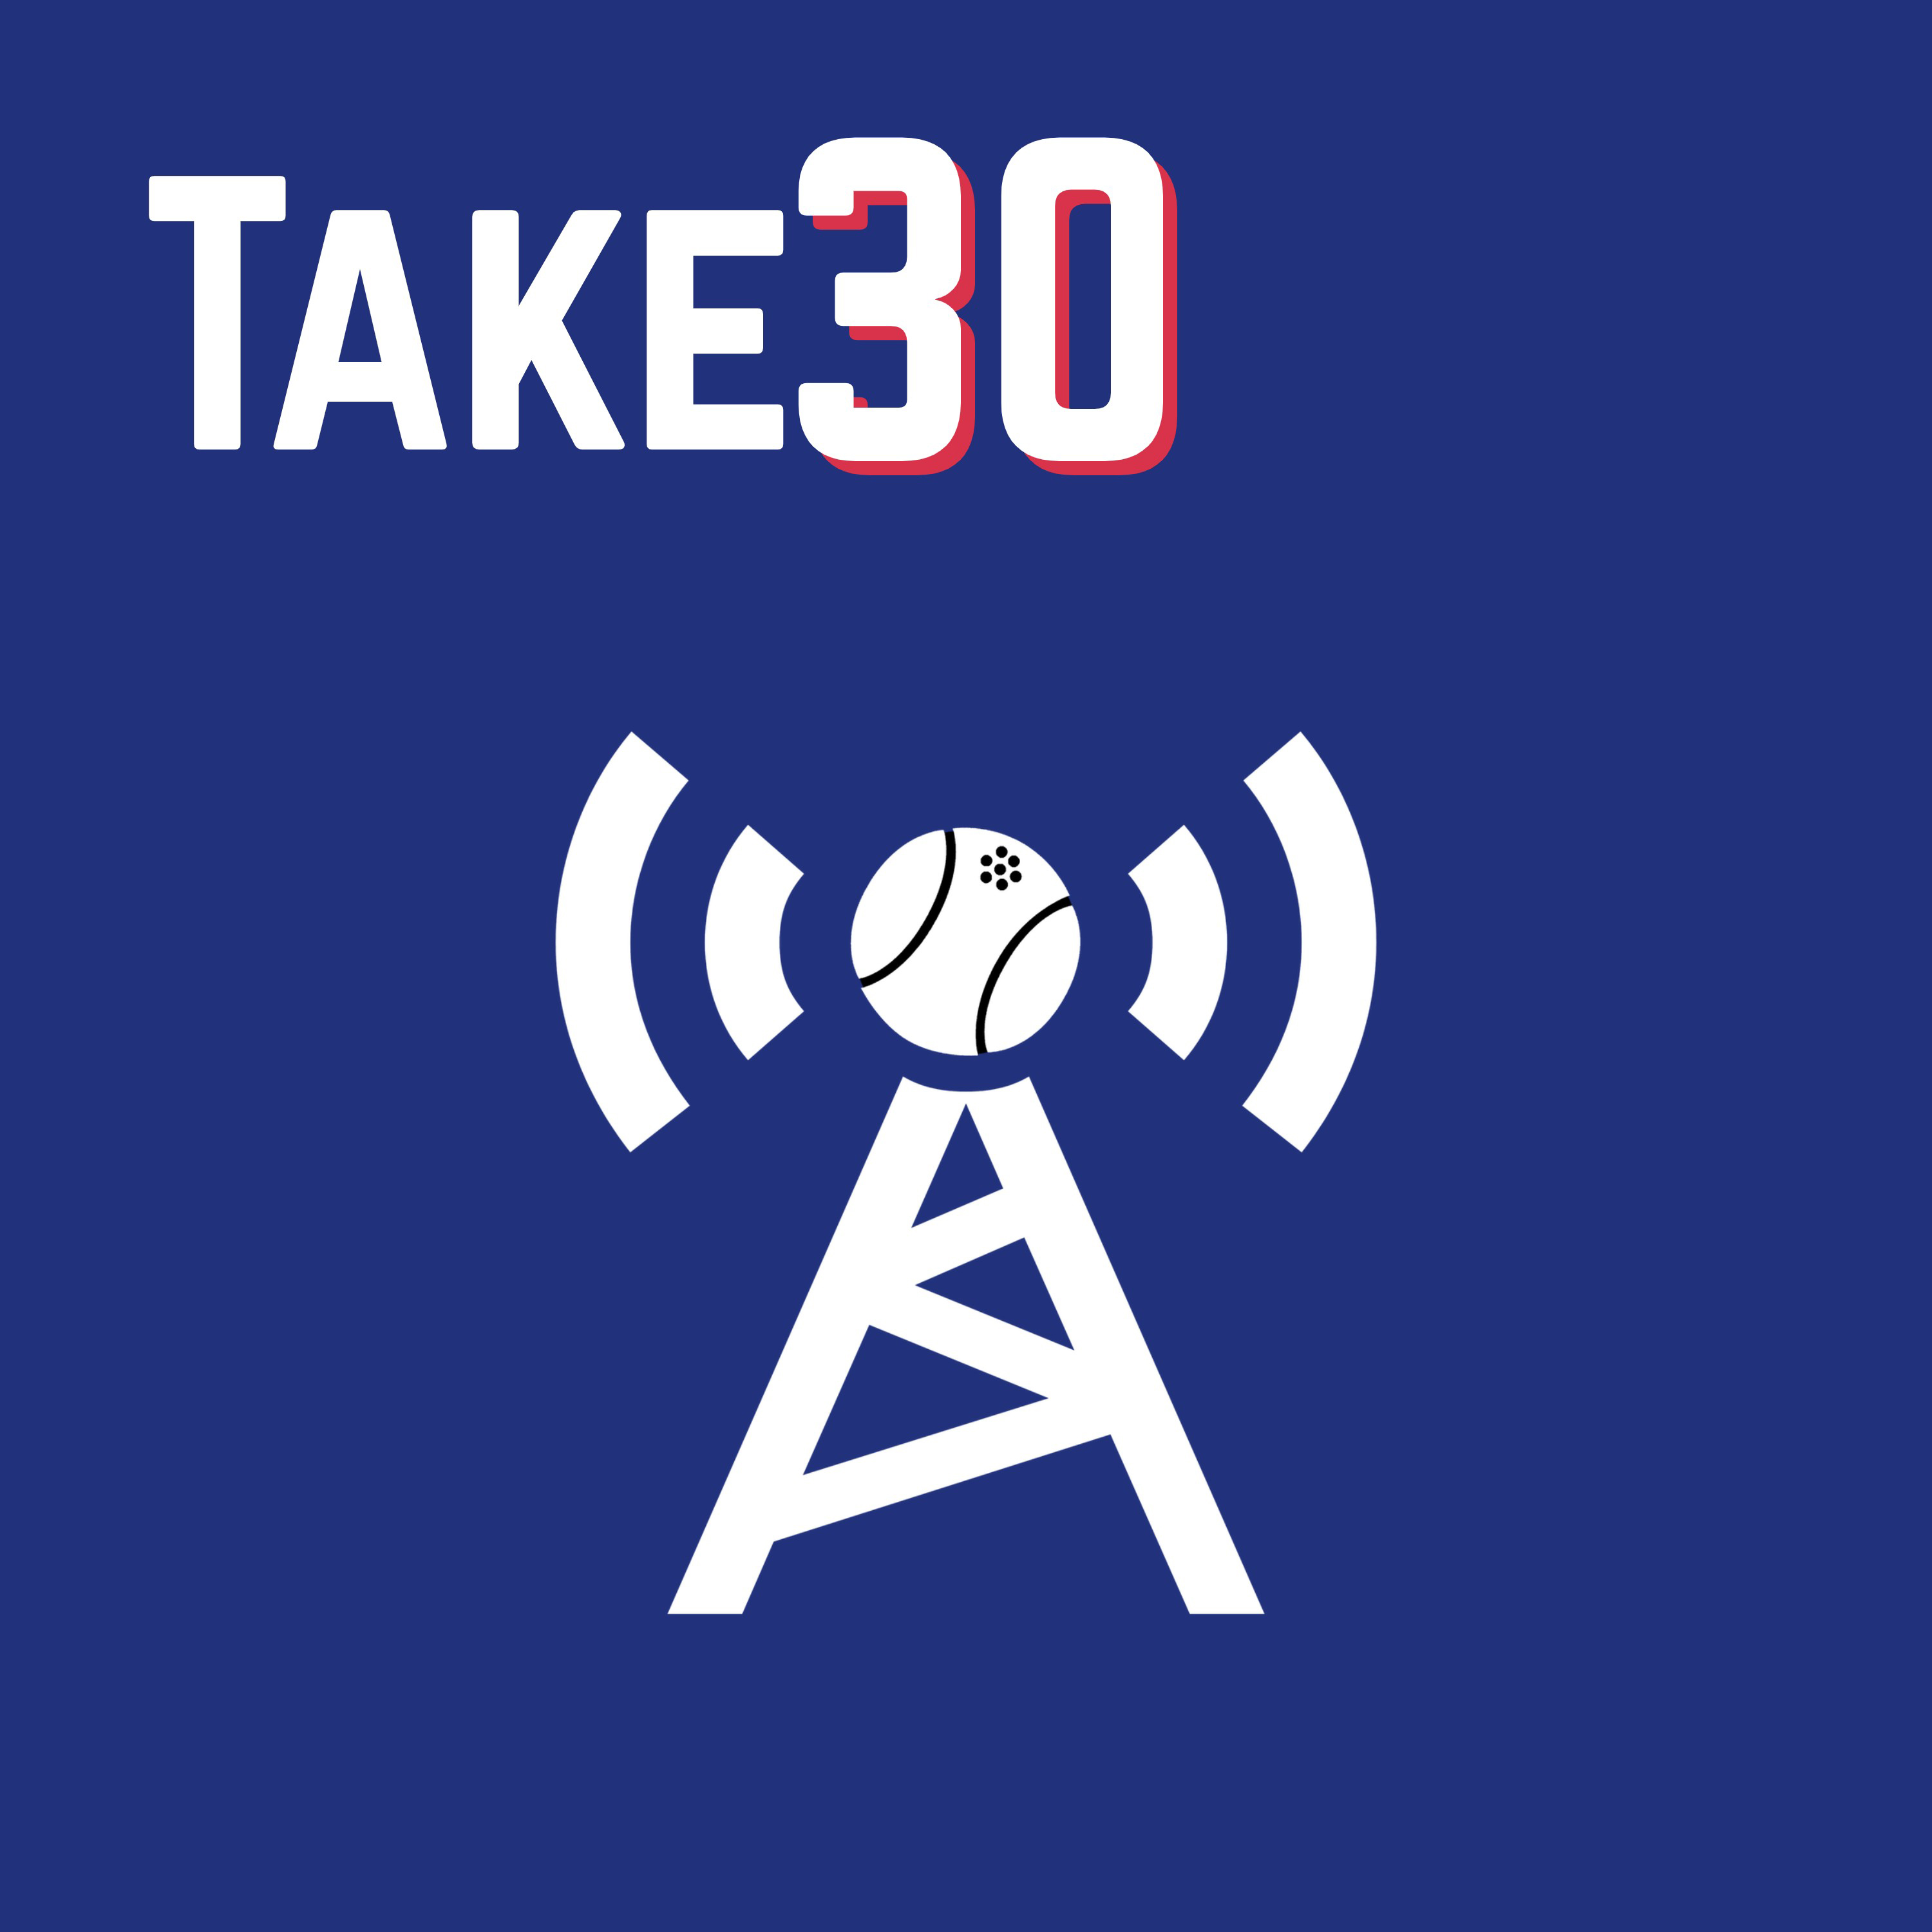 Take30 by the National Beep Baseball Association